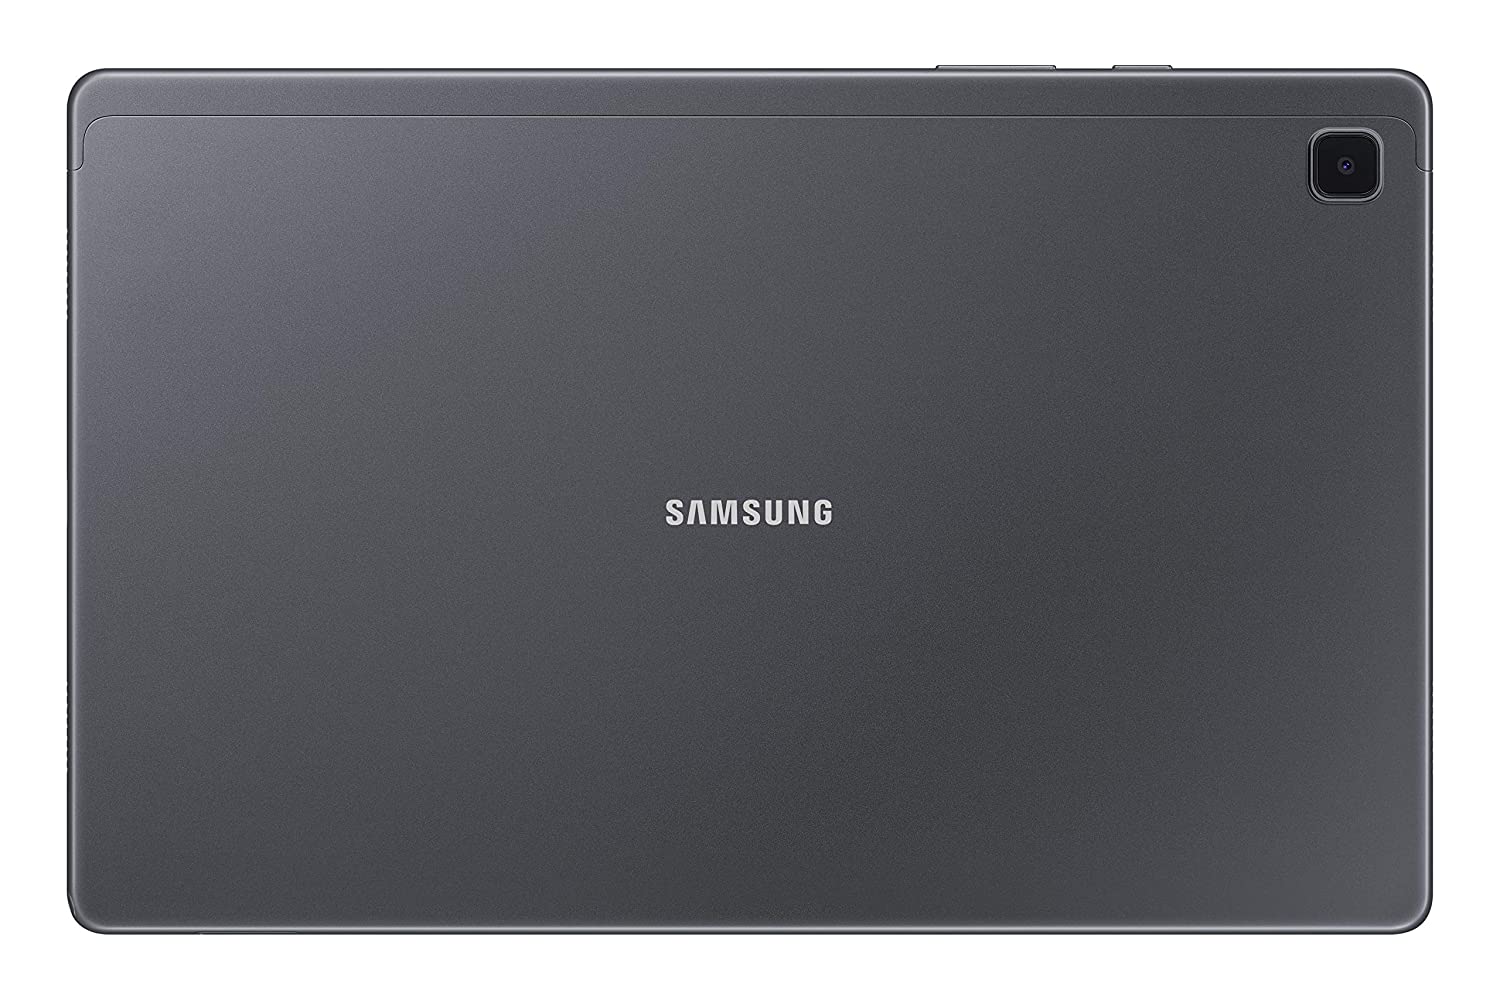 Samsung Galaxy Tab S6 Lite 26.31 cm (10.4 inch), Slim and Light